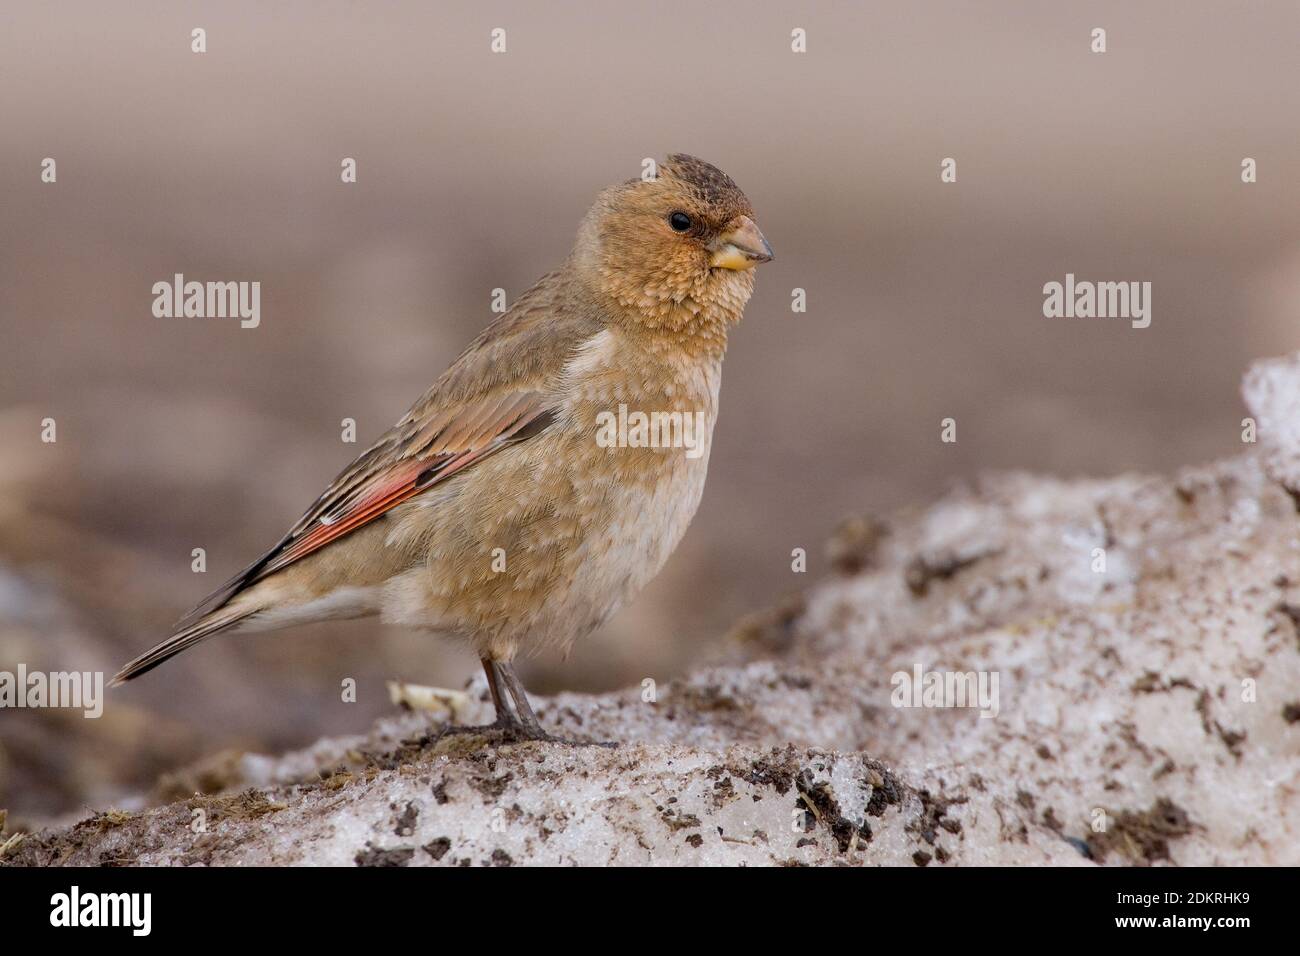 Rode Bergvink Mannetje zittend in de sneeuw, asiáticos machos alados carmesí Finch, encaramado en la nieve. Foto de stock